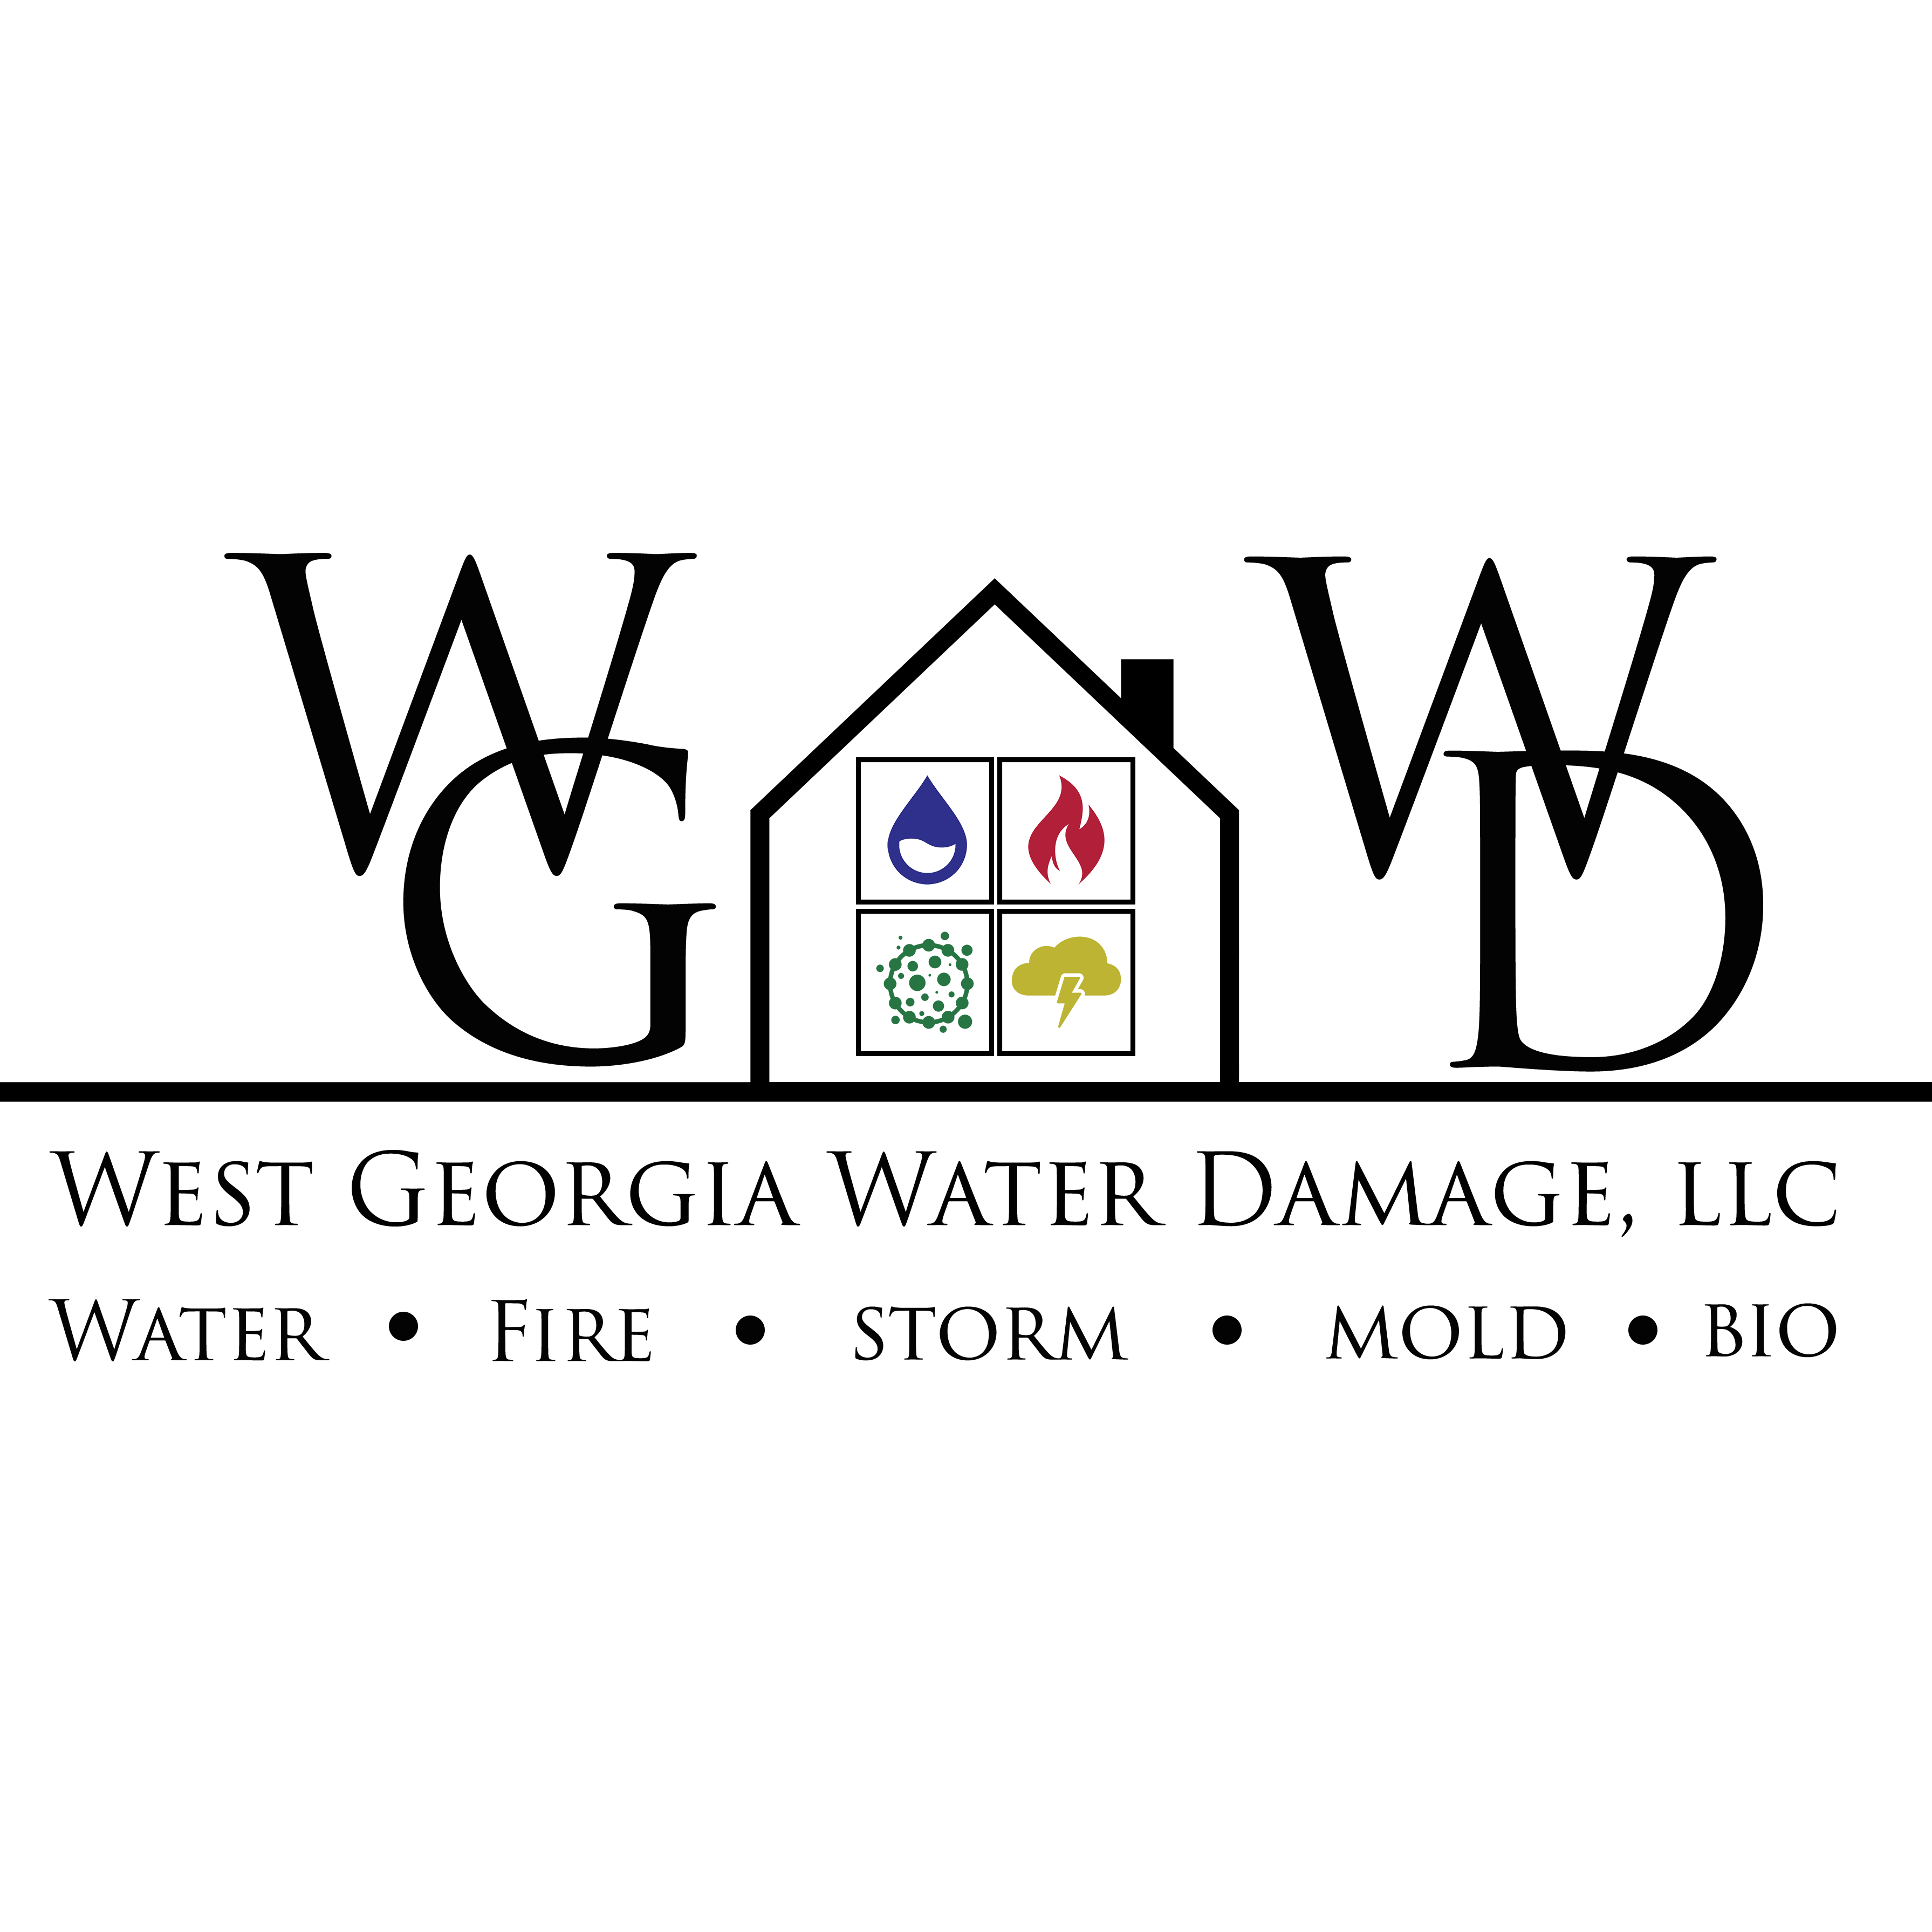 West Georgia Water Damage